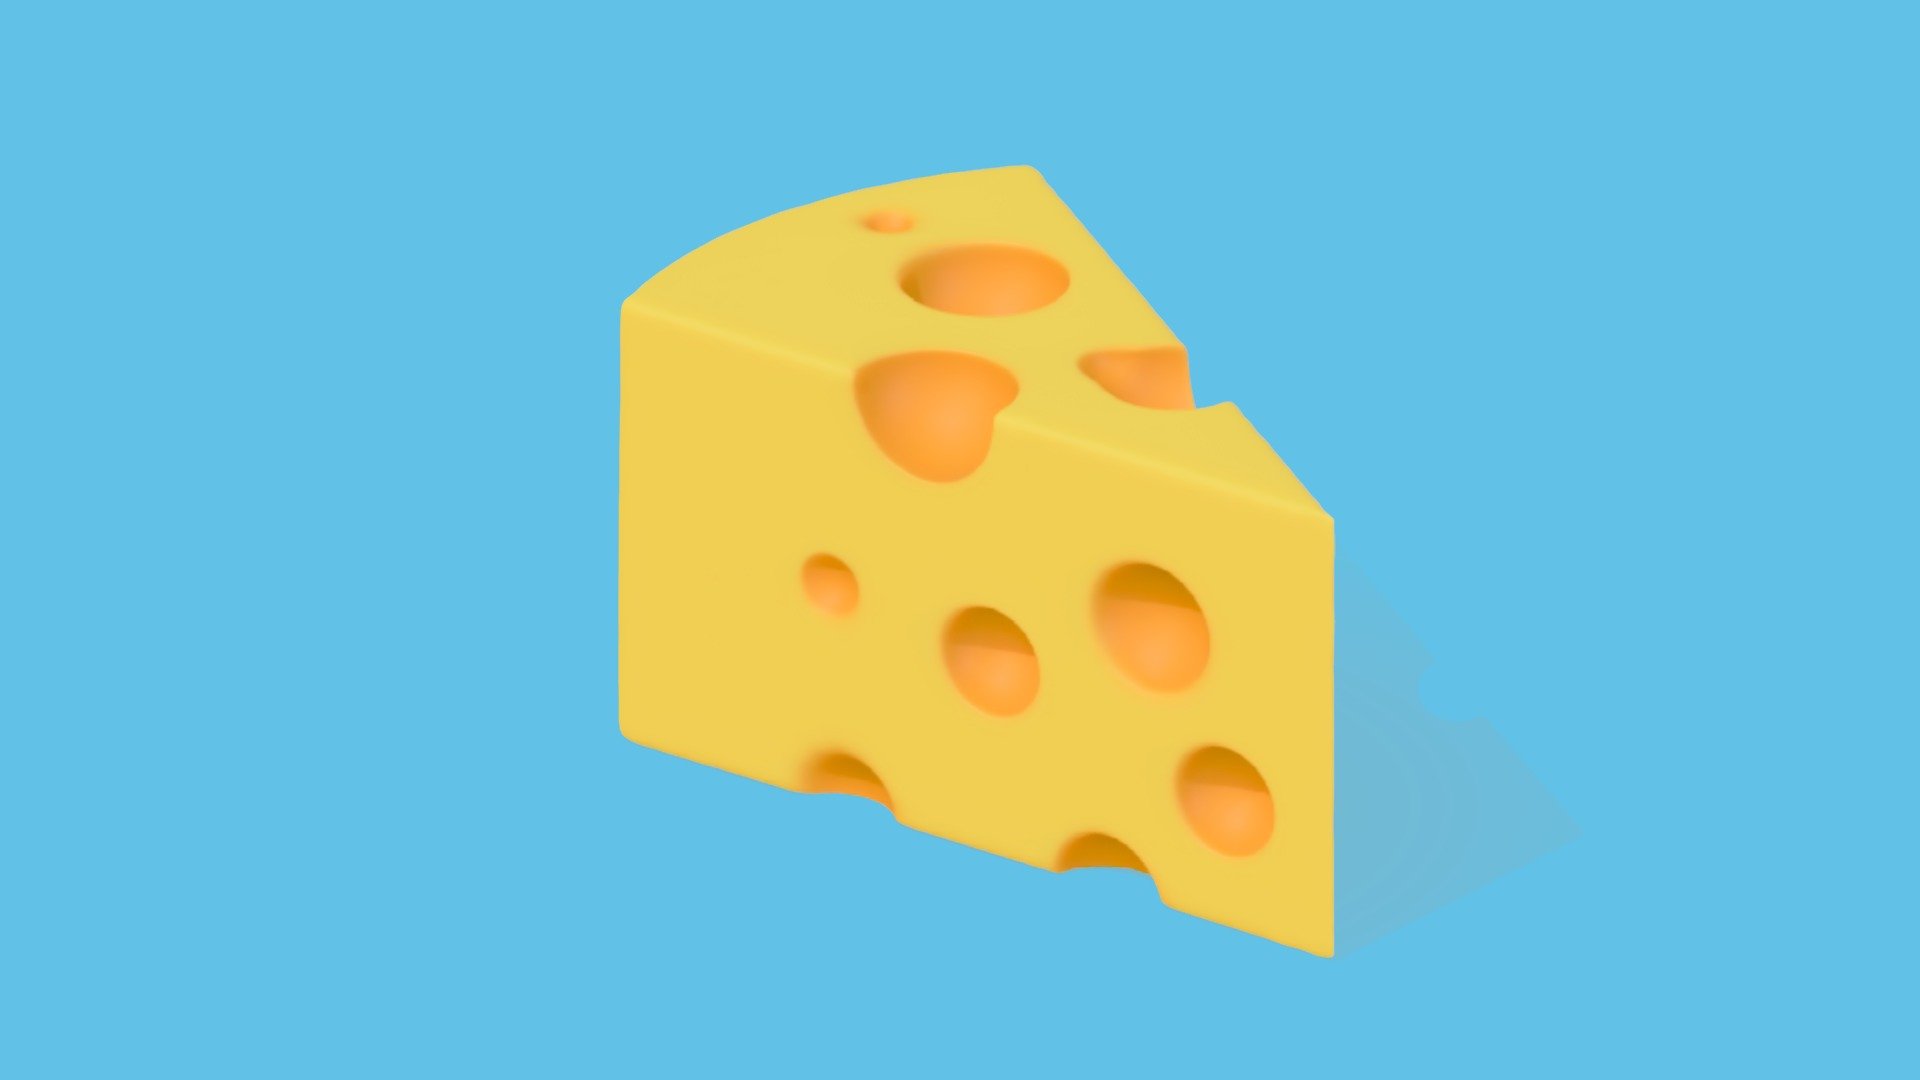 cheese wedge